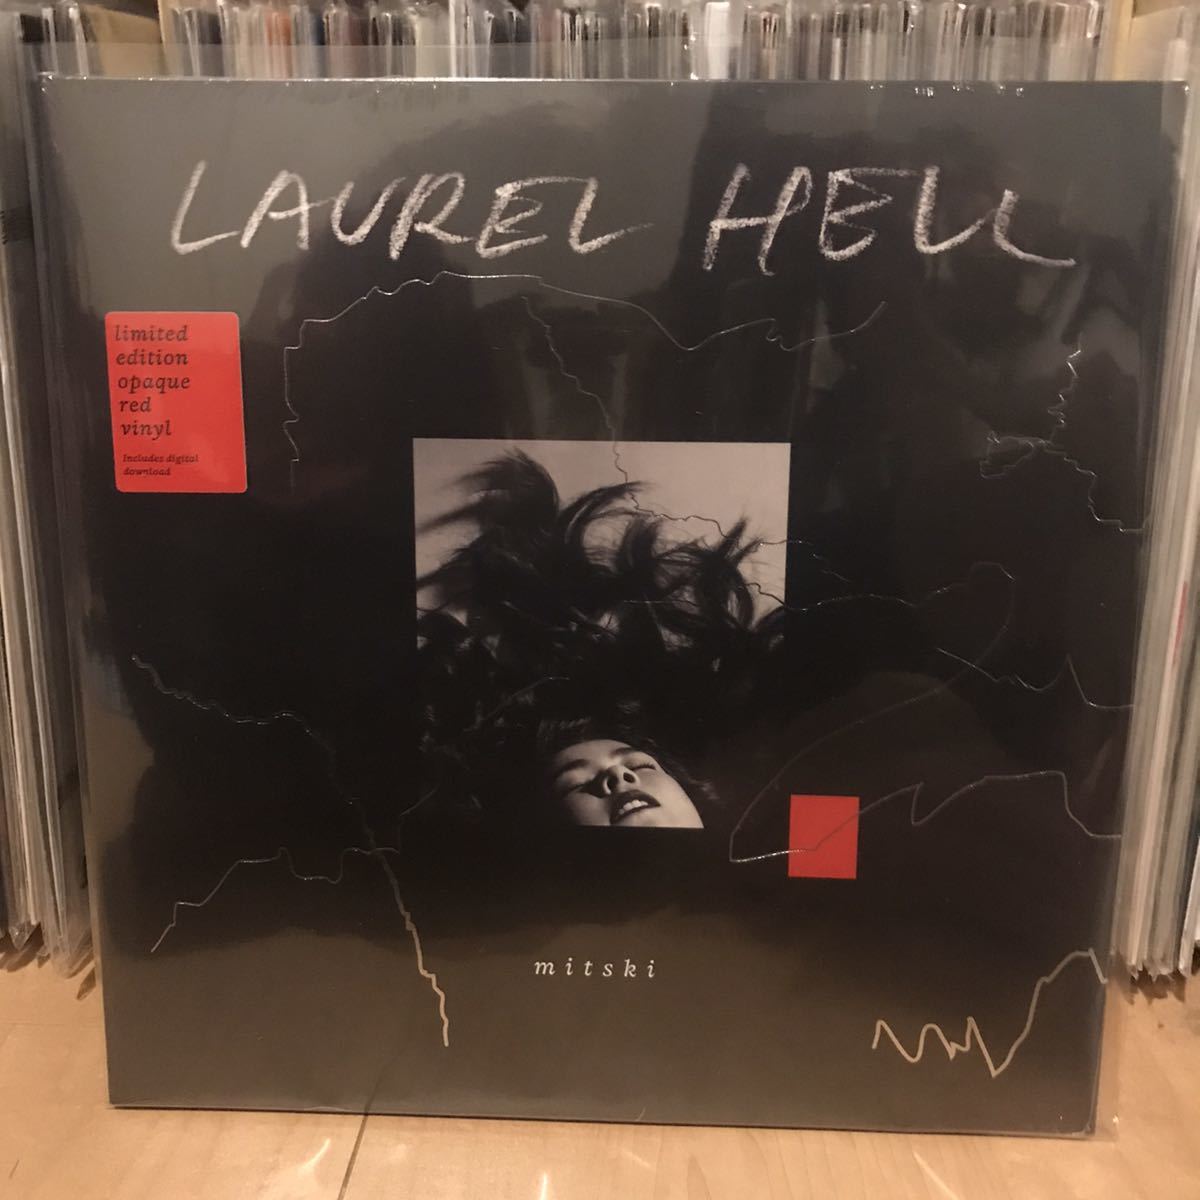 Mitski Laurel Hell Limited Opapue Red Vinyl Indie Exclusive 新品未開封 LP アナログレコード 限定盤_画像1